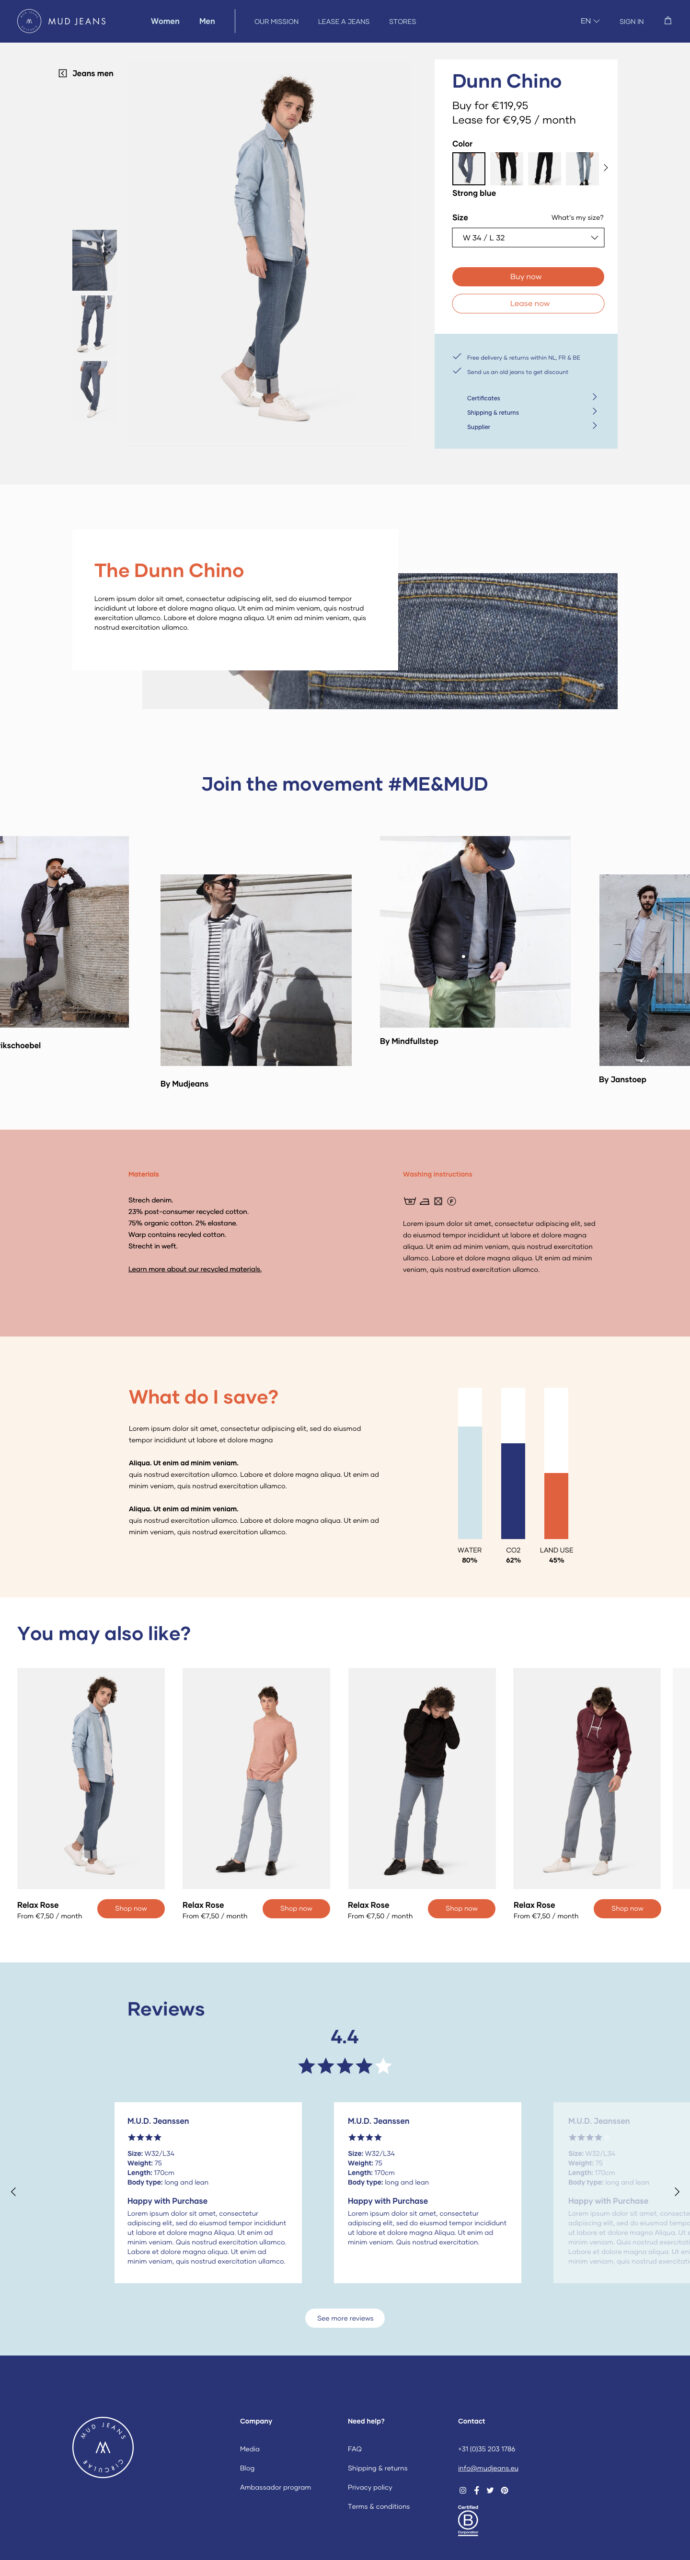 Design website MUD jeans